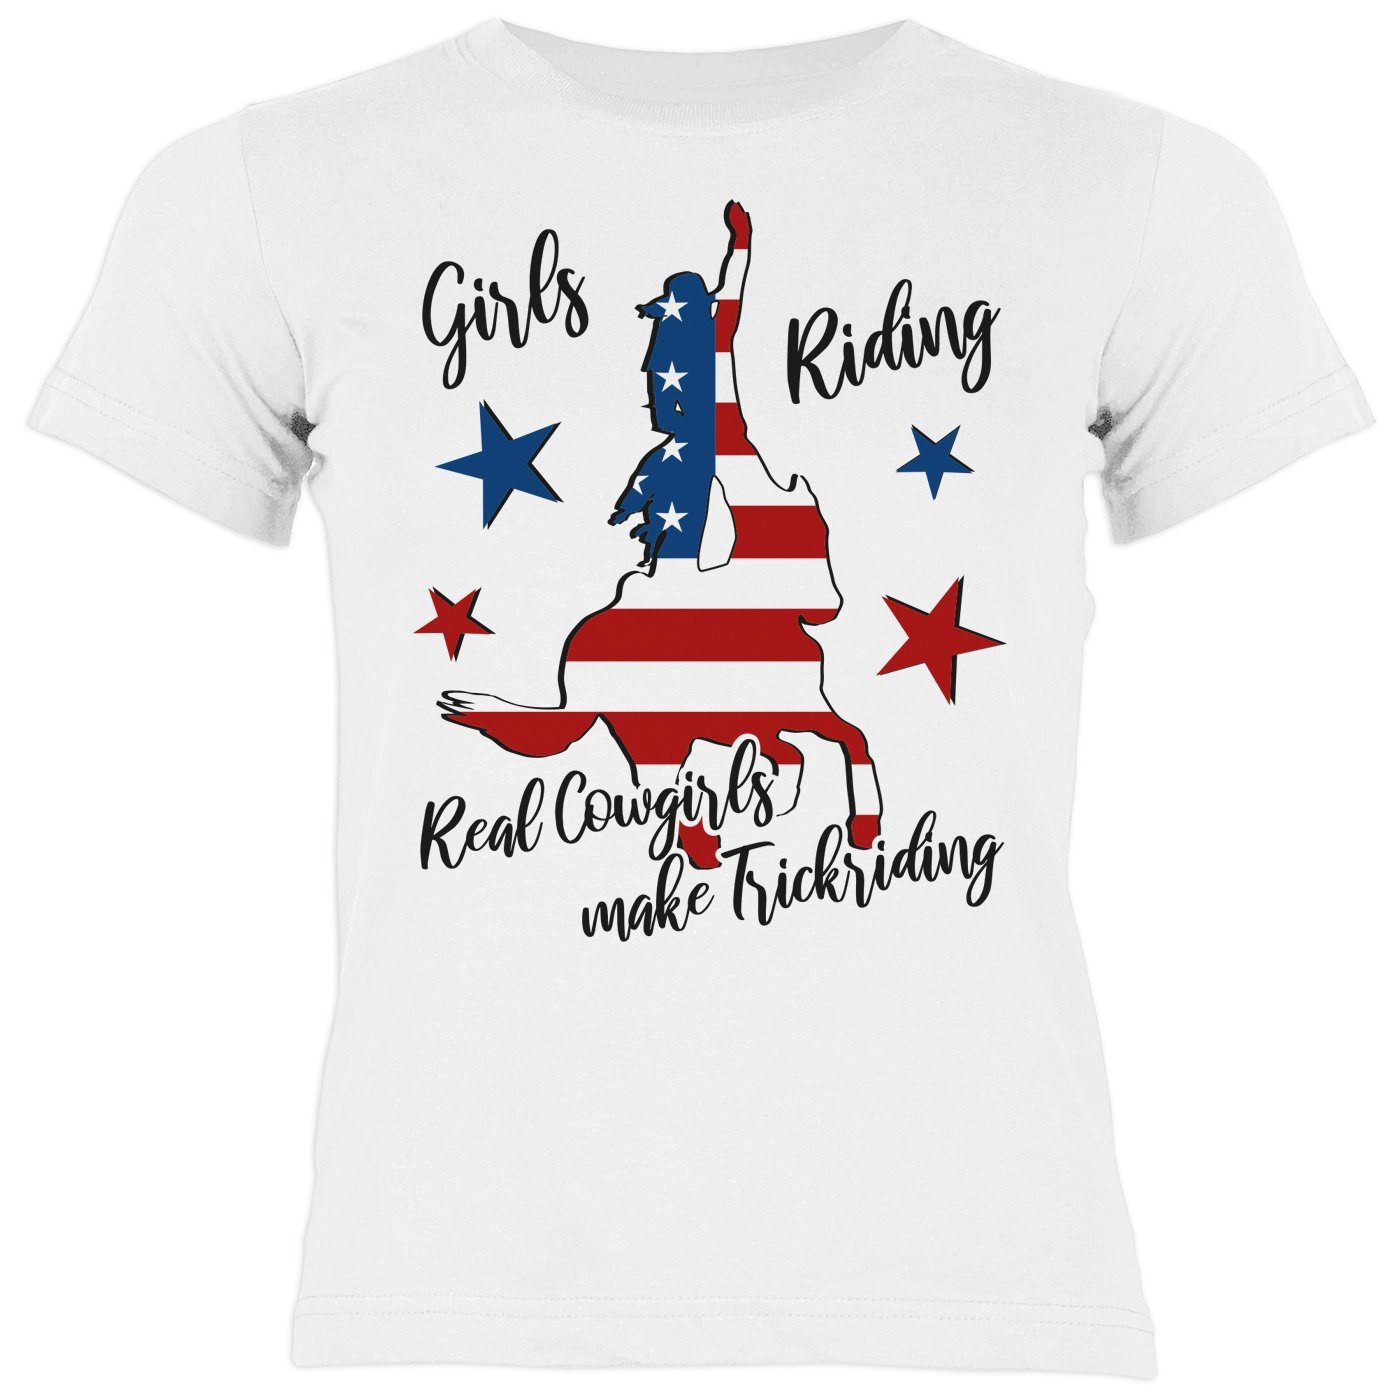 Motiv Cowgirls Girls Trickriding Trickriding : Cowgirl Trickreiter Shirt - Kindershirt Trickreiter Riding Shirts Real make Tini Kinder T-Shirt T-Shirt